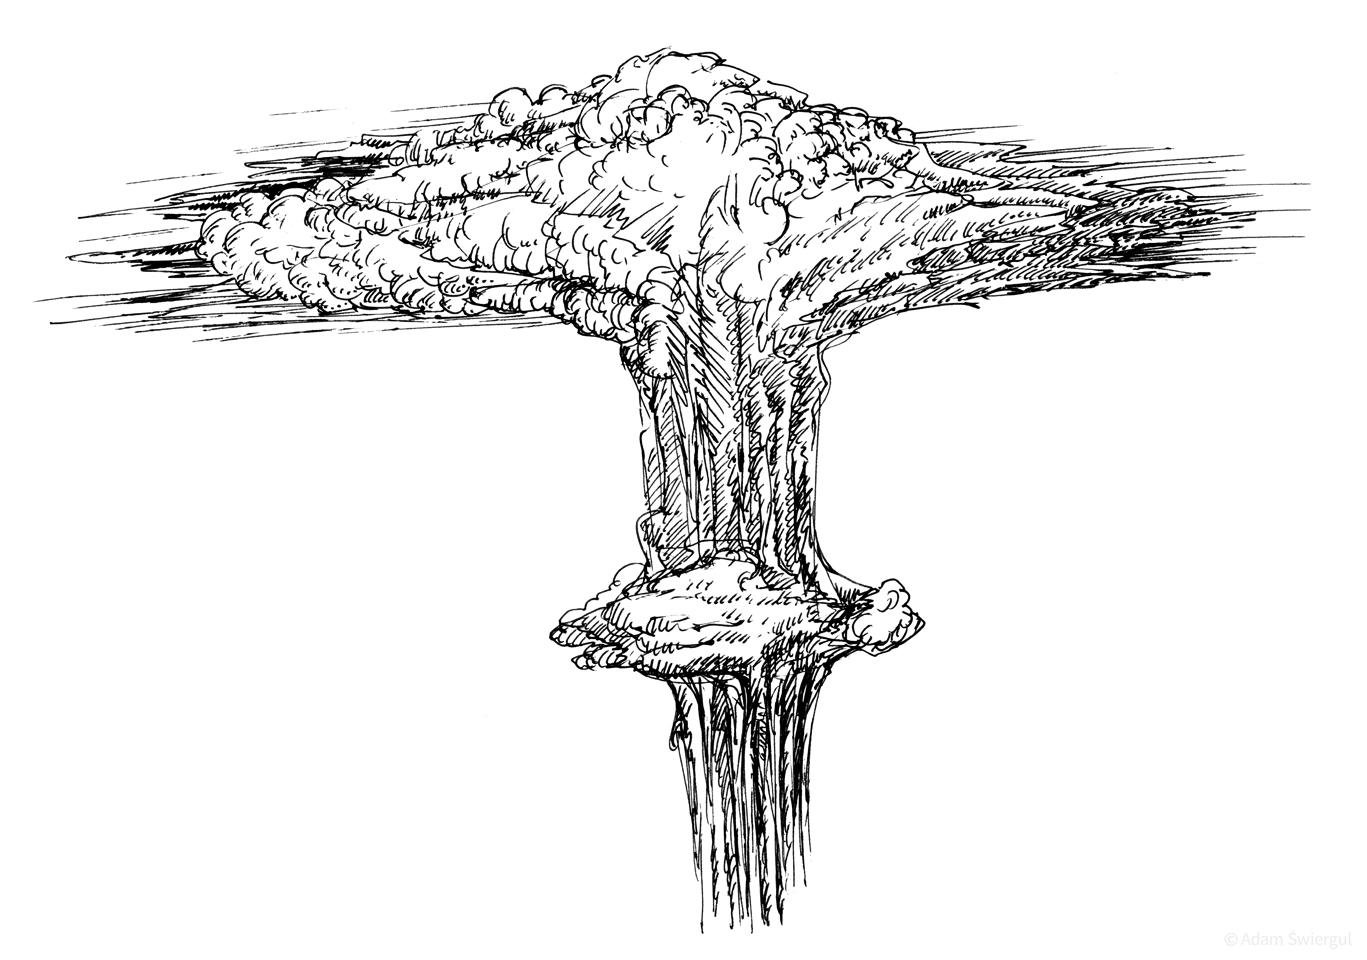 Cumulonimbus - rysunek, długopis